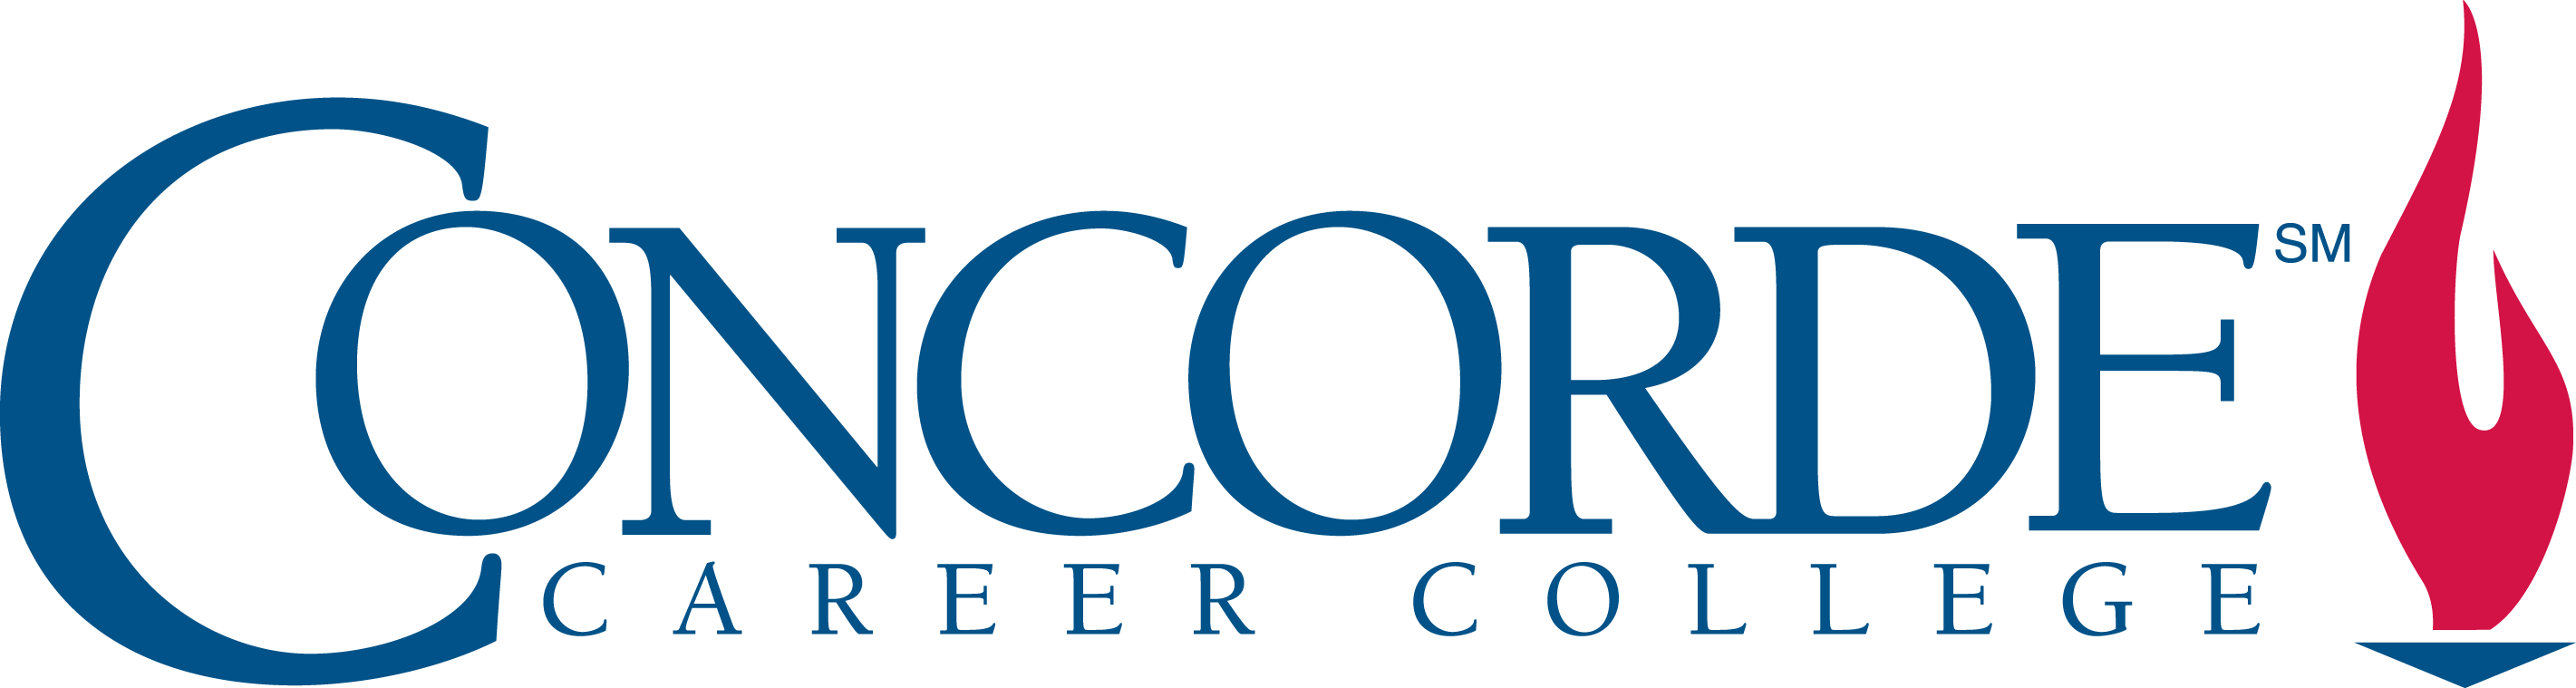 Concorde Career Colleges Web Site